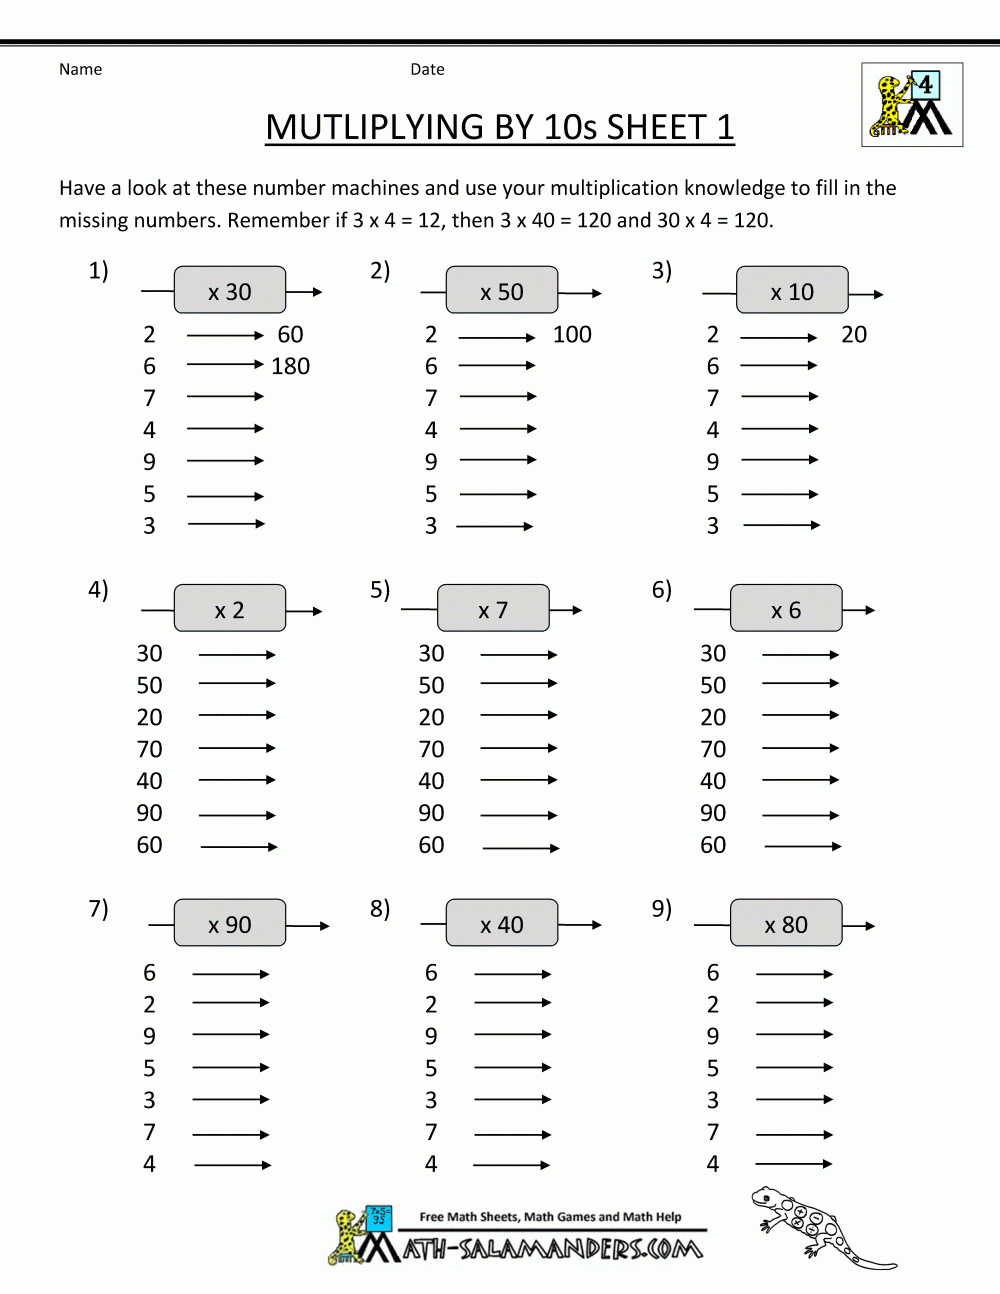 Multiplication Fact Sheets | Math Facts Worksheets Printables